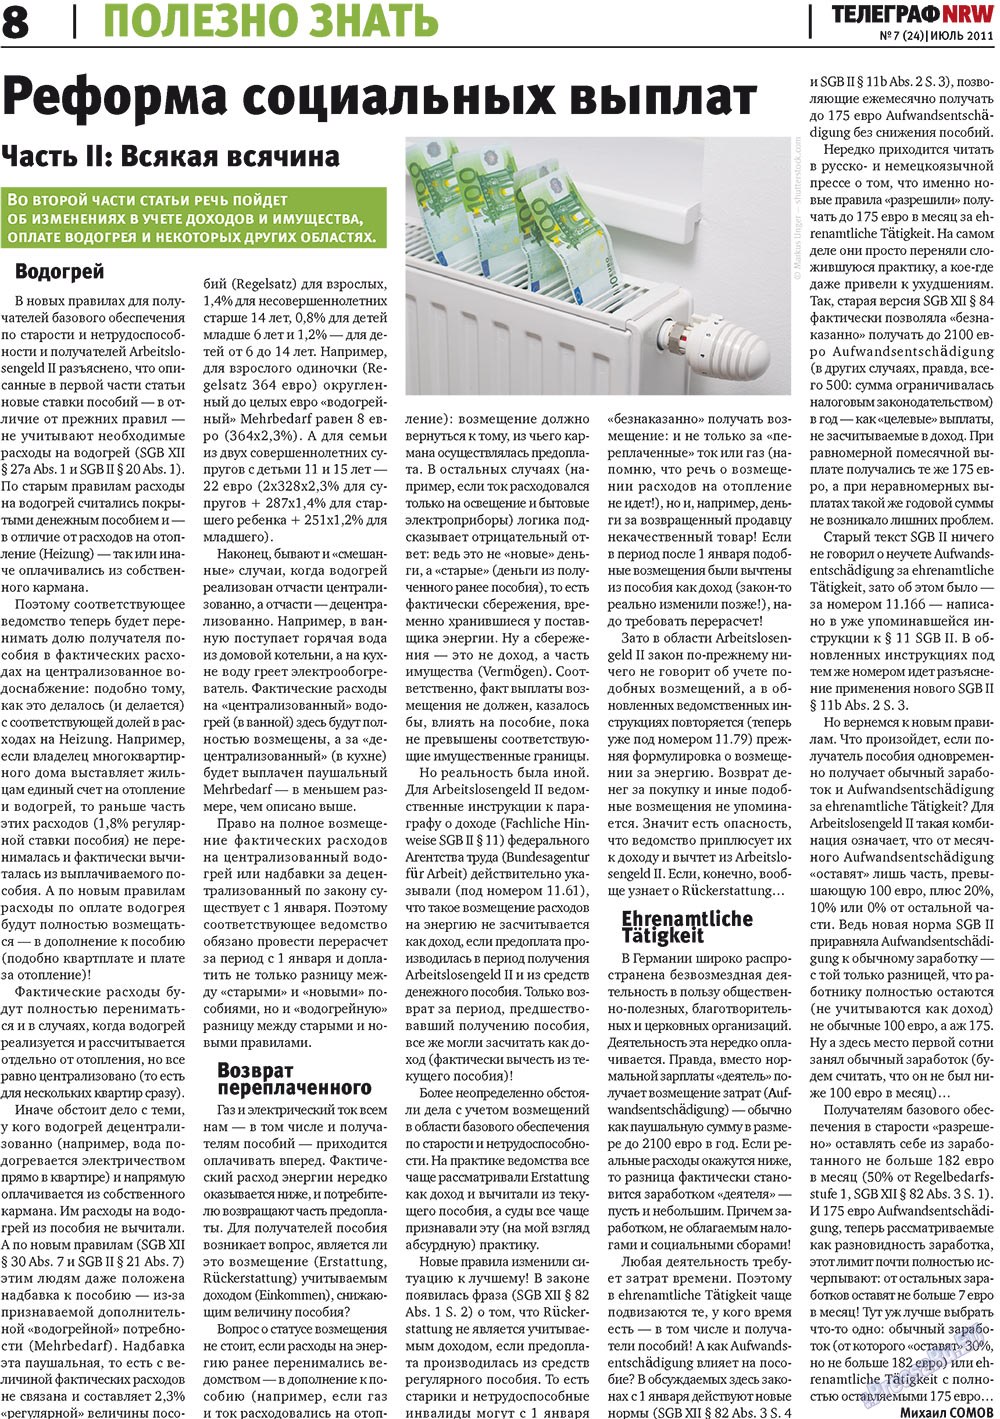 Телеграф NRW, газета. 2011 №7 стр.8